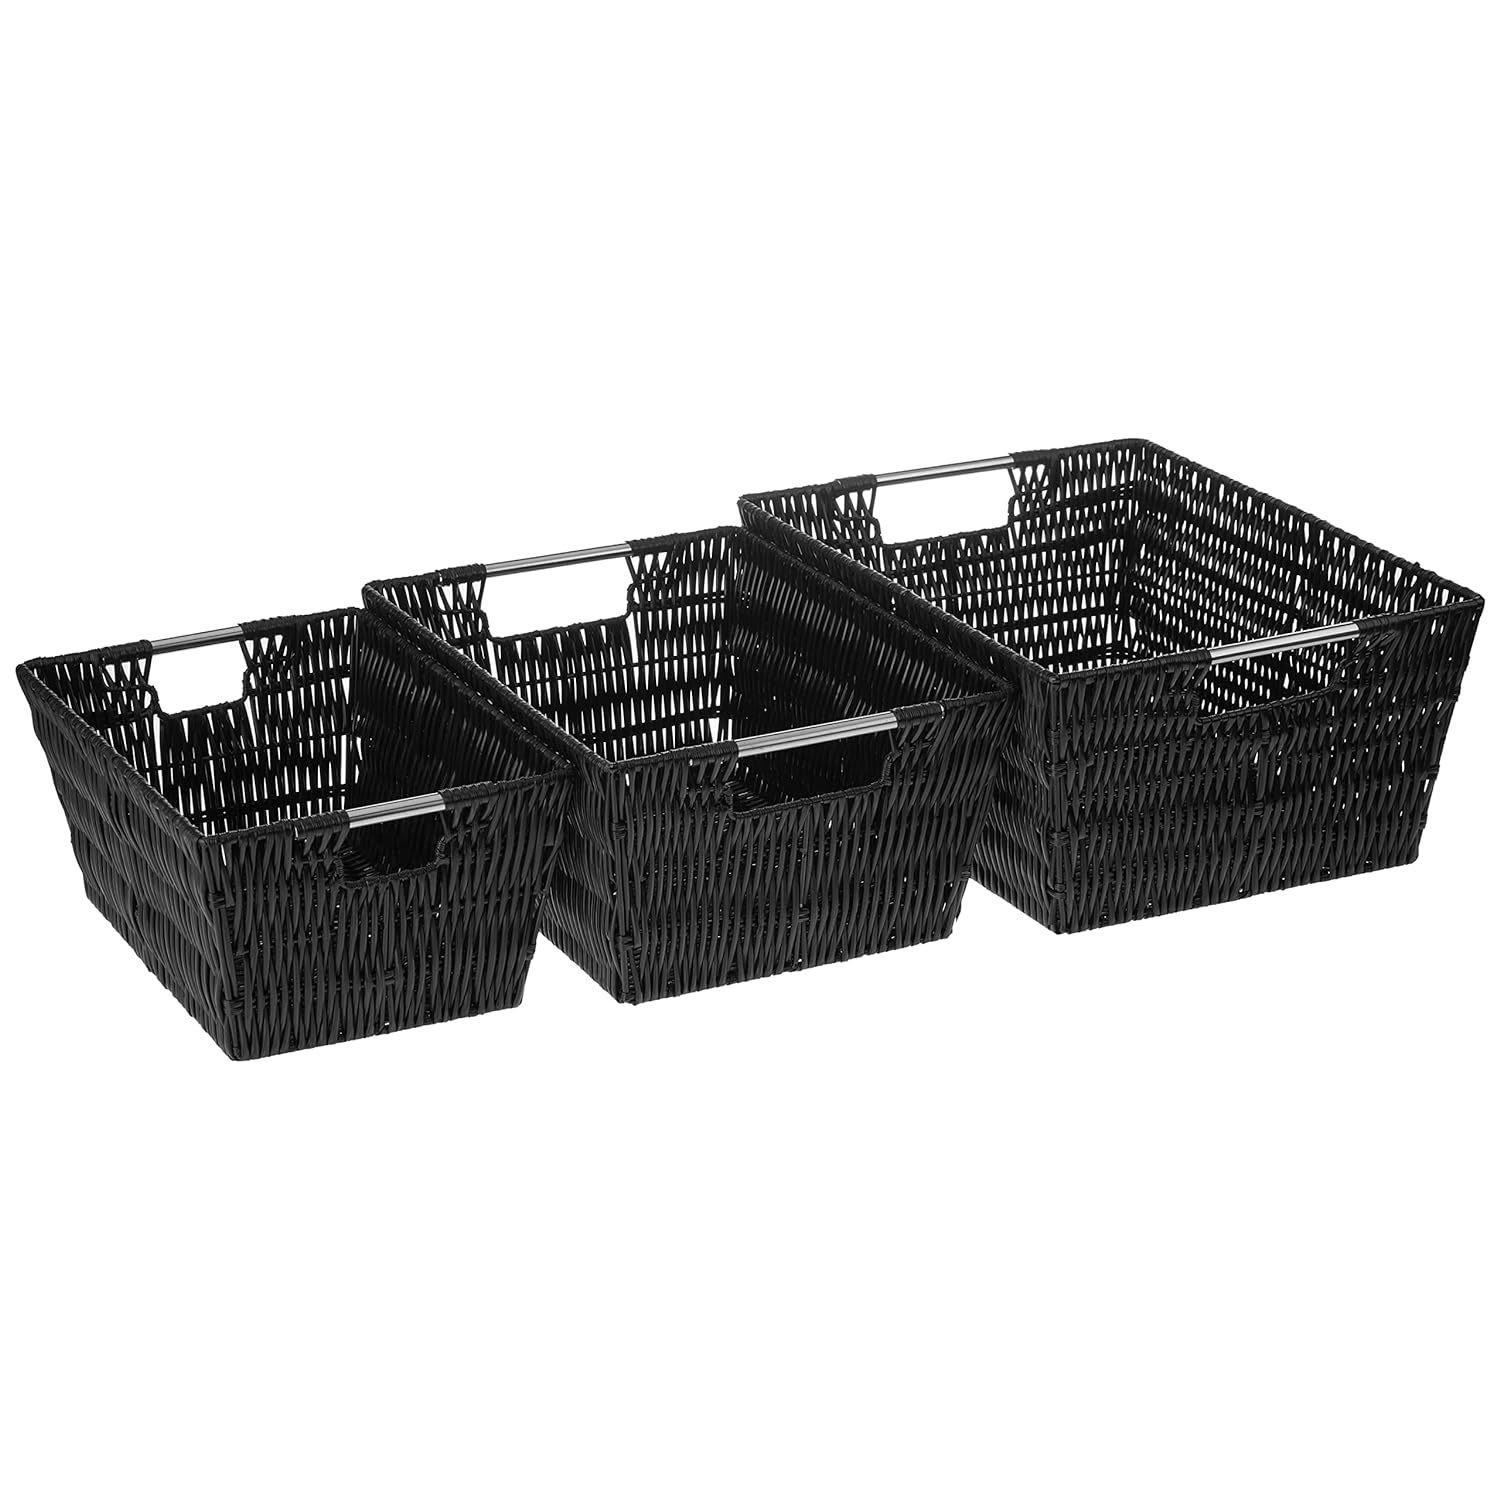 Primary image for Whitmor Rattique Storage Baskets - Black - (3 Piece Set)